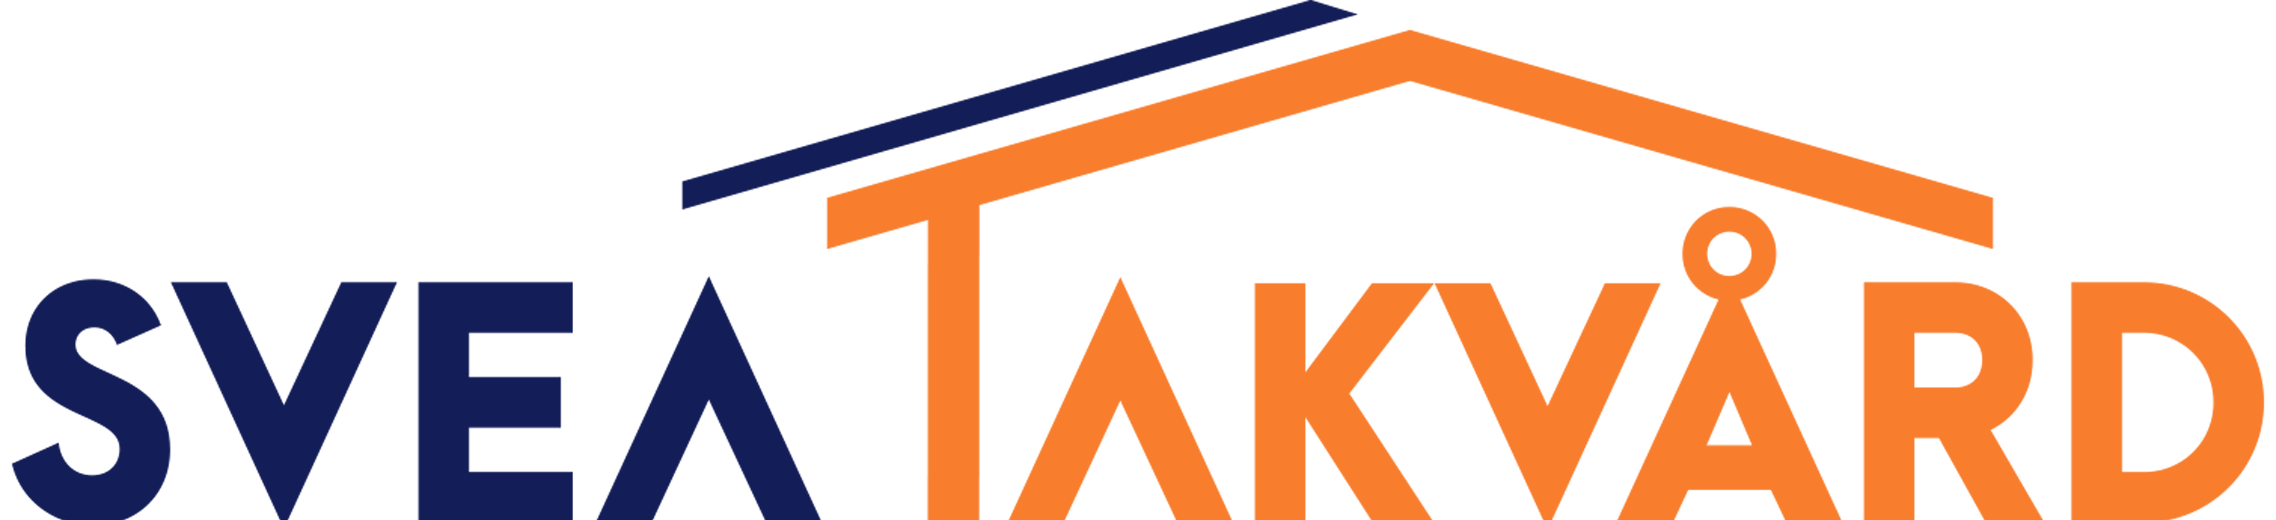 SVEA Takvard logo